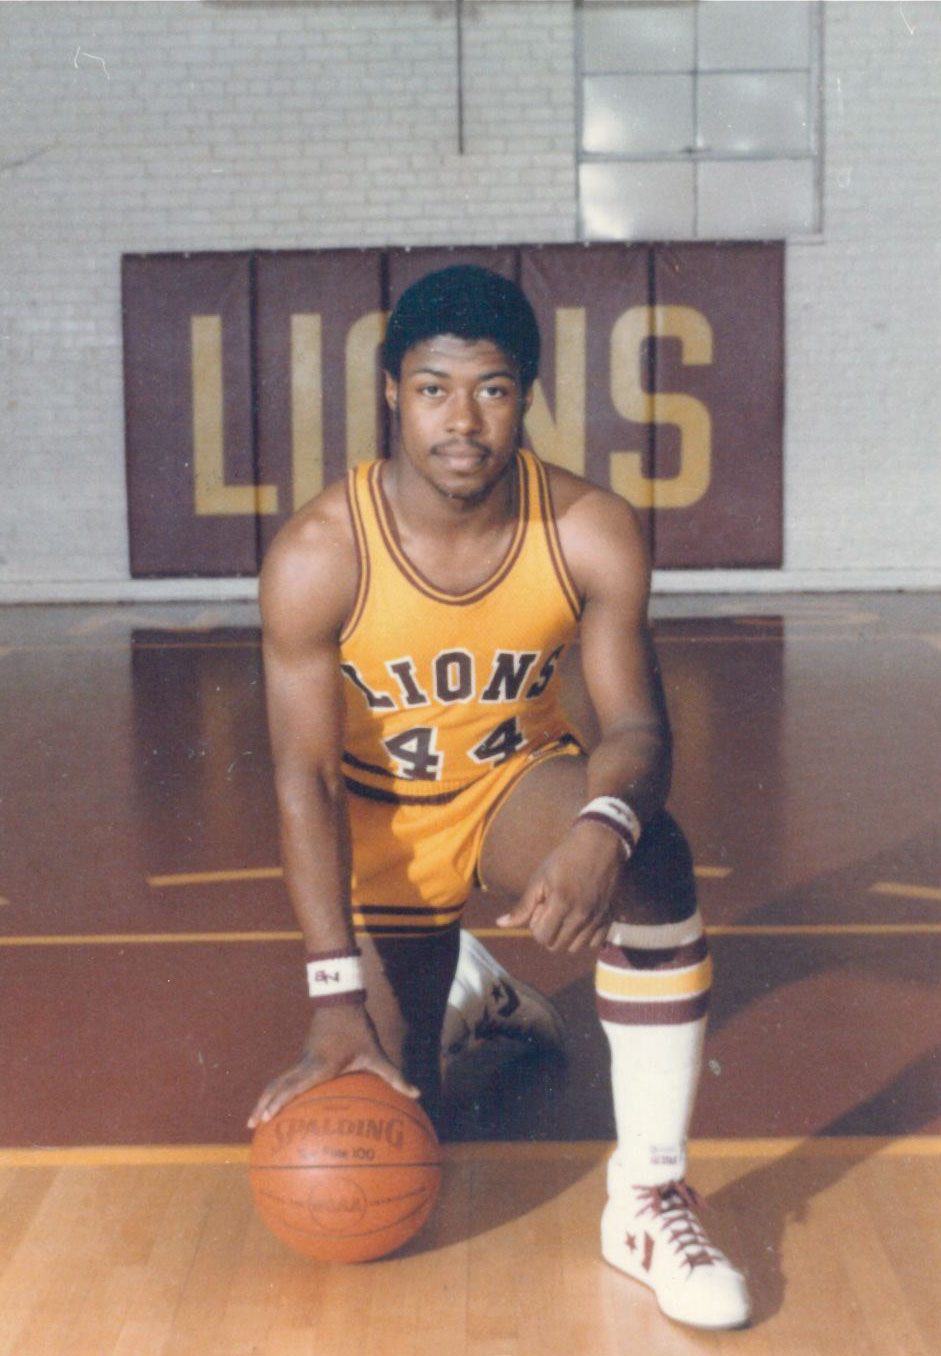 leon jones wearing a basketball uniform